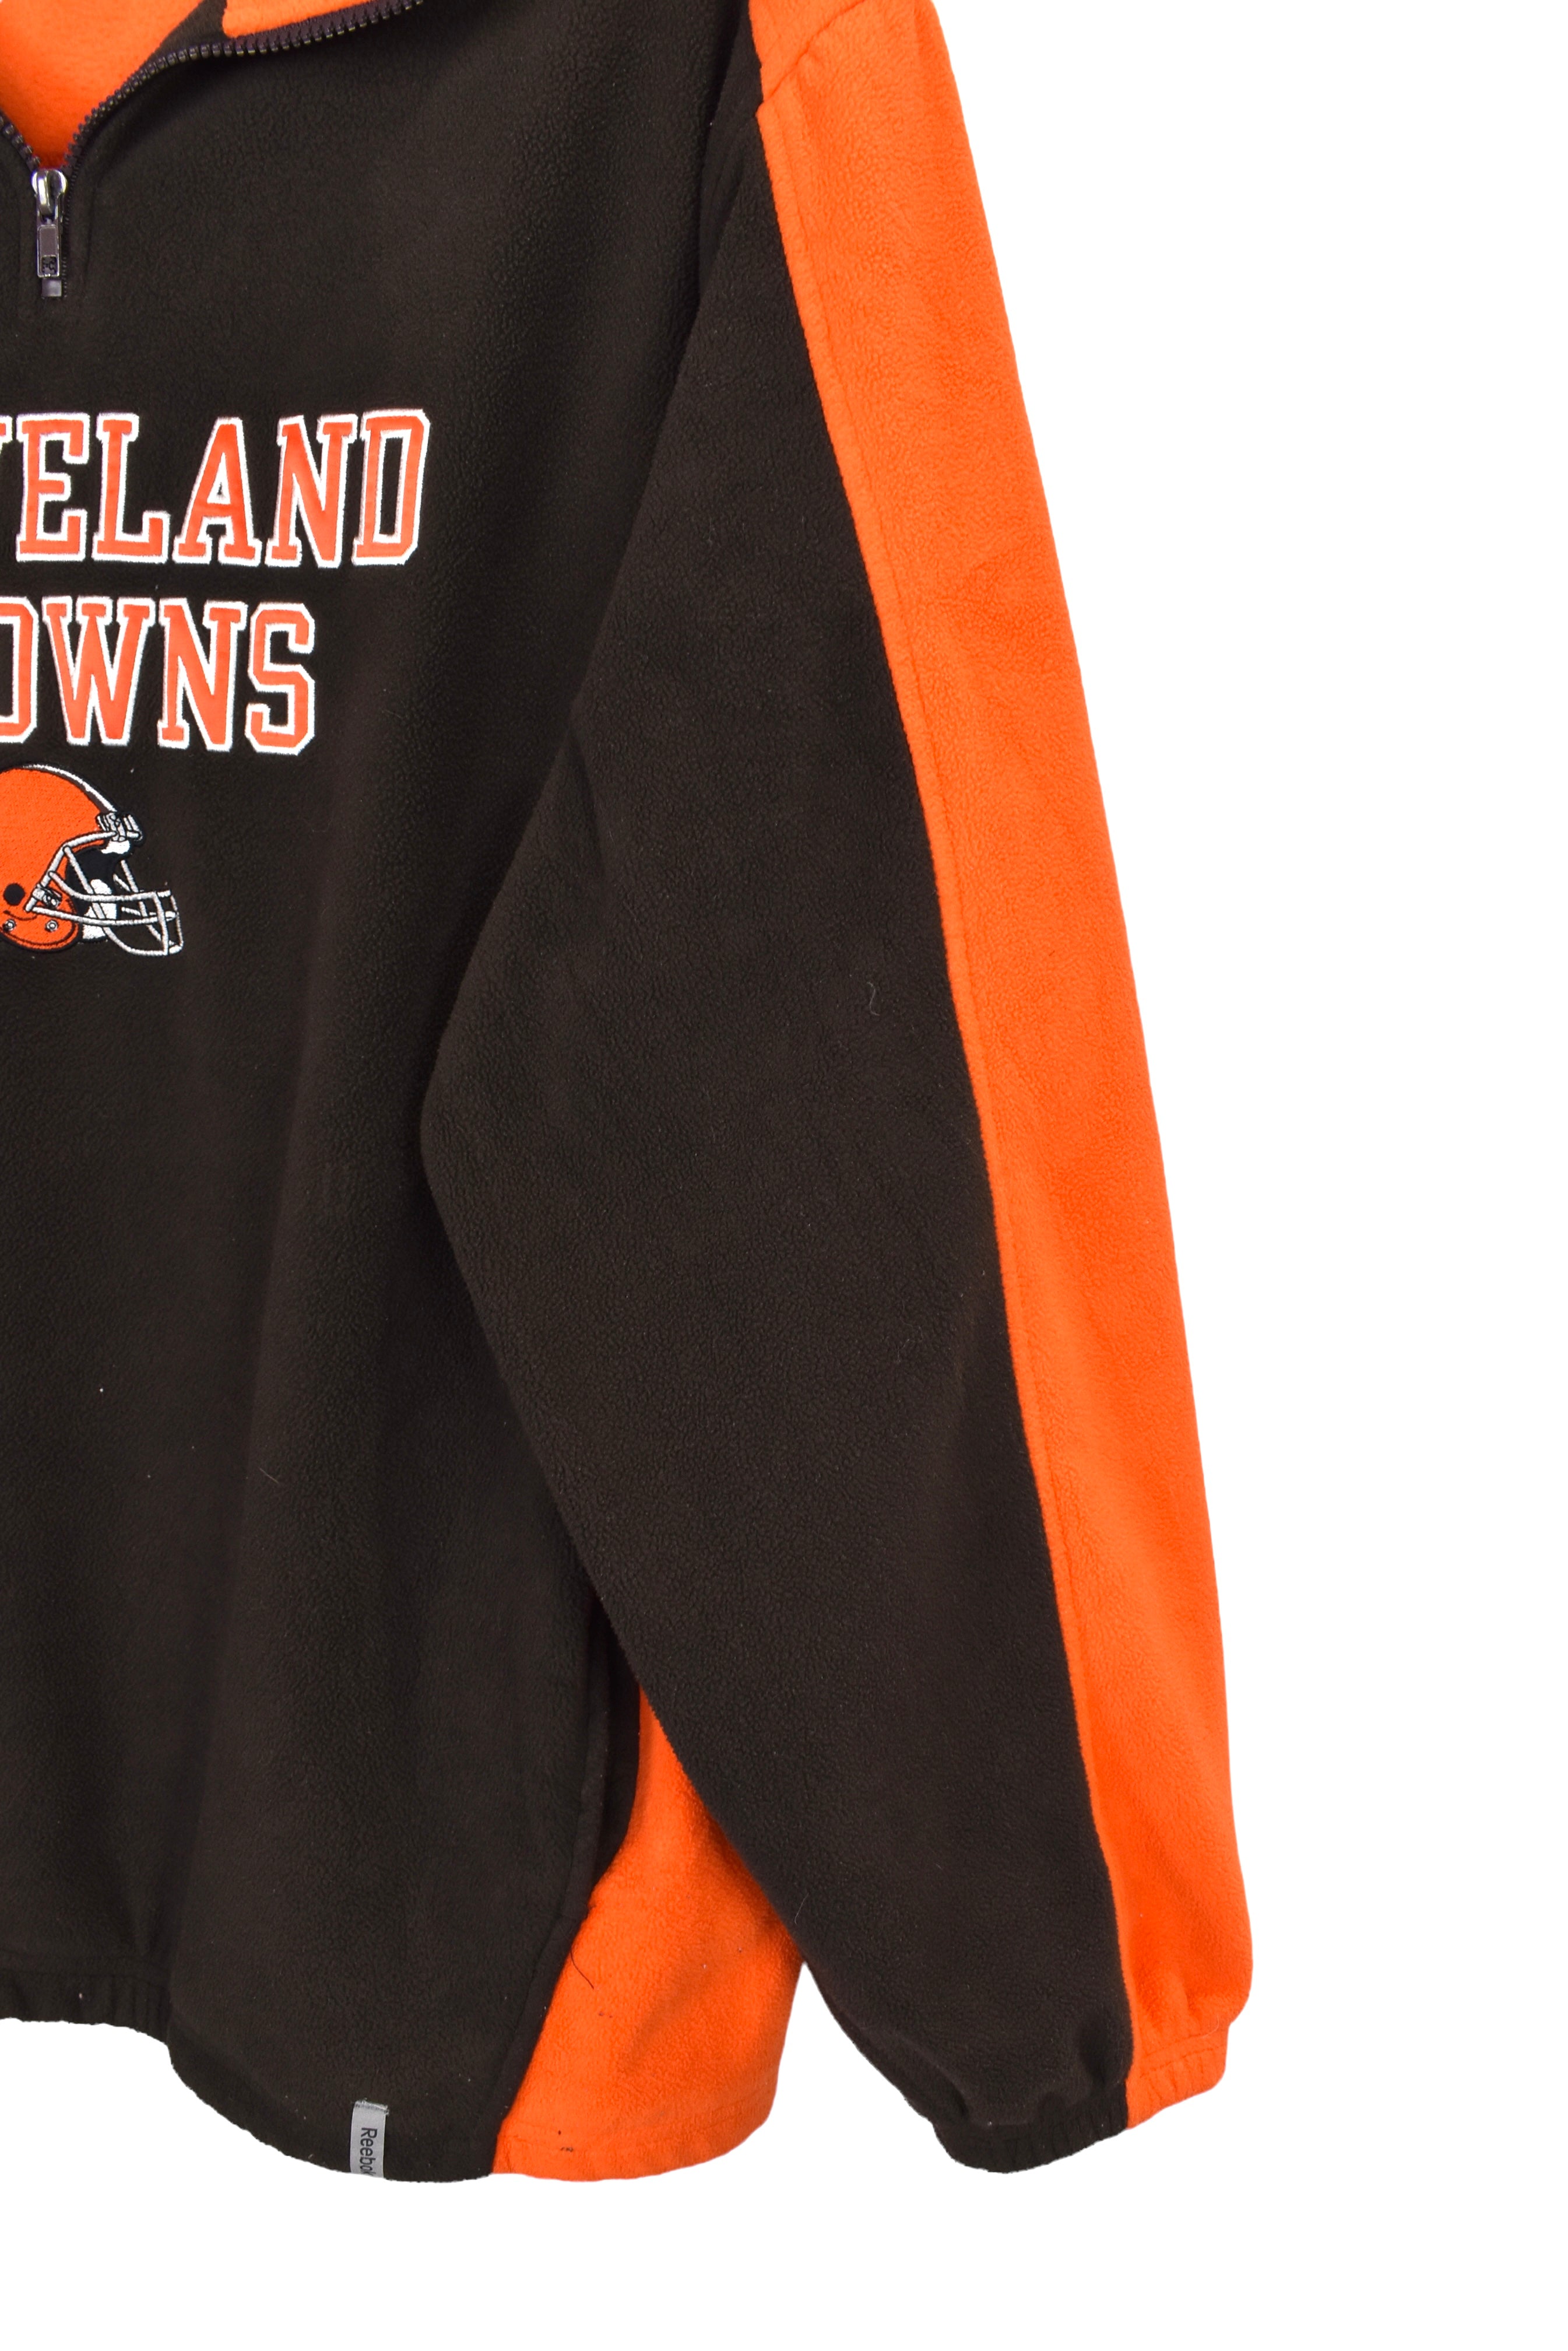 Cleveland Browns Sweatshirts & Fleece, Browns Sweatshirts & Fleece